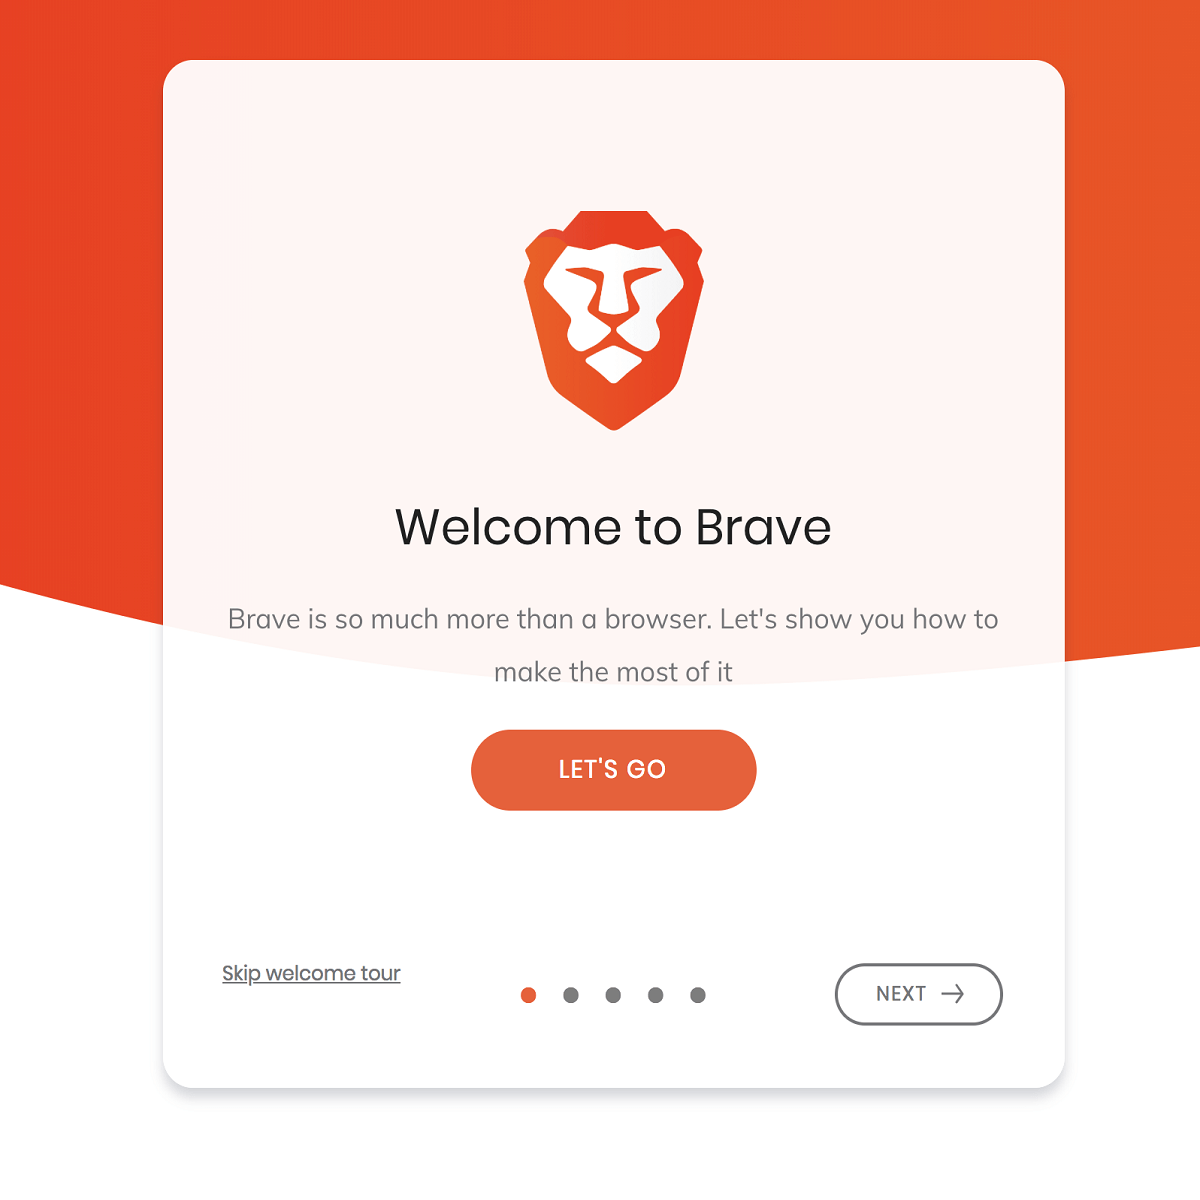 download brave browser pc